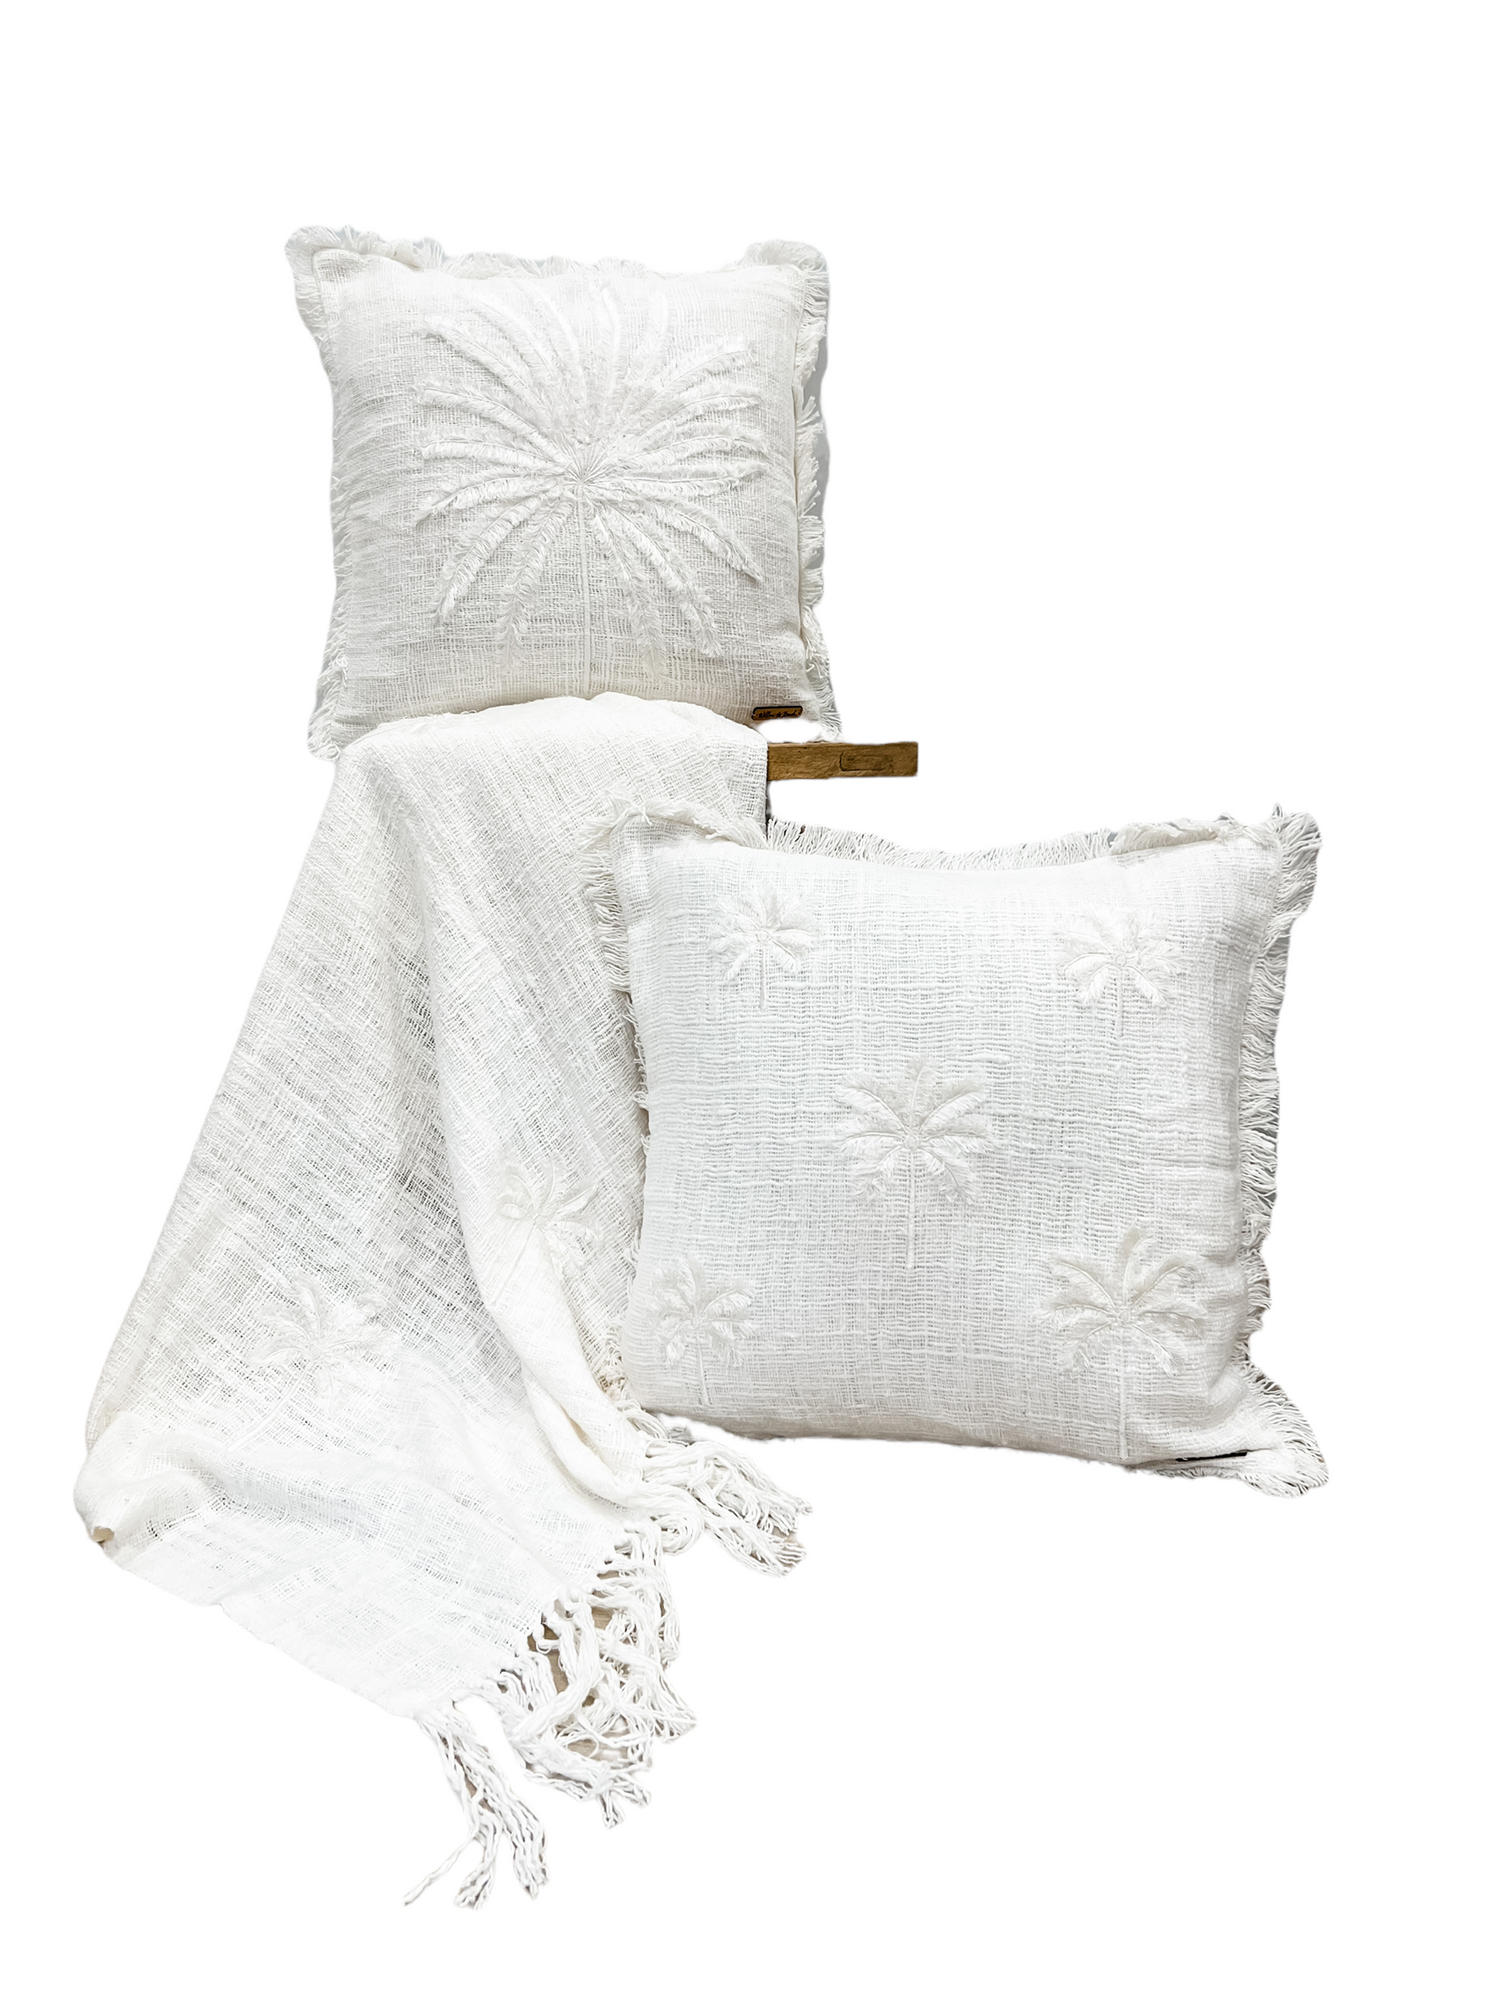 Vanilla Palms Cushion Cover featuring cotton slub, palm embroidery and tassel fringe